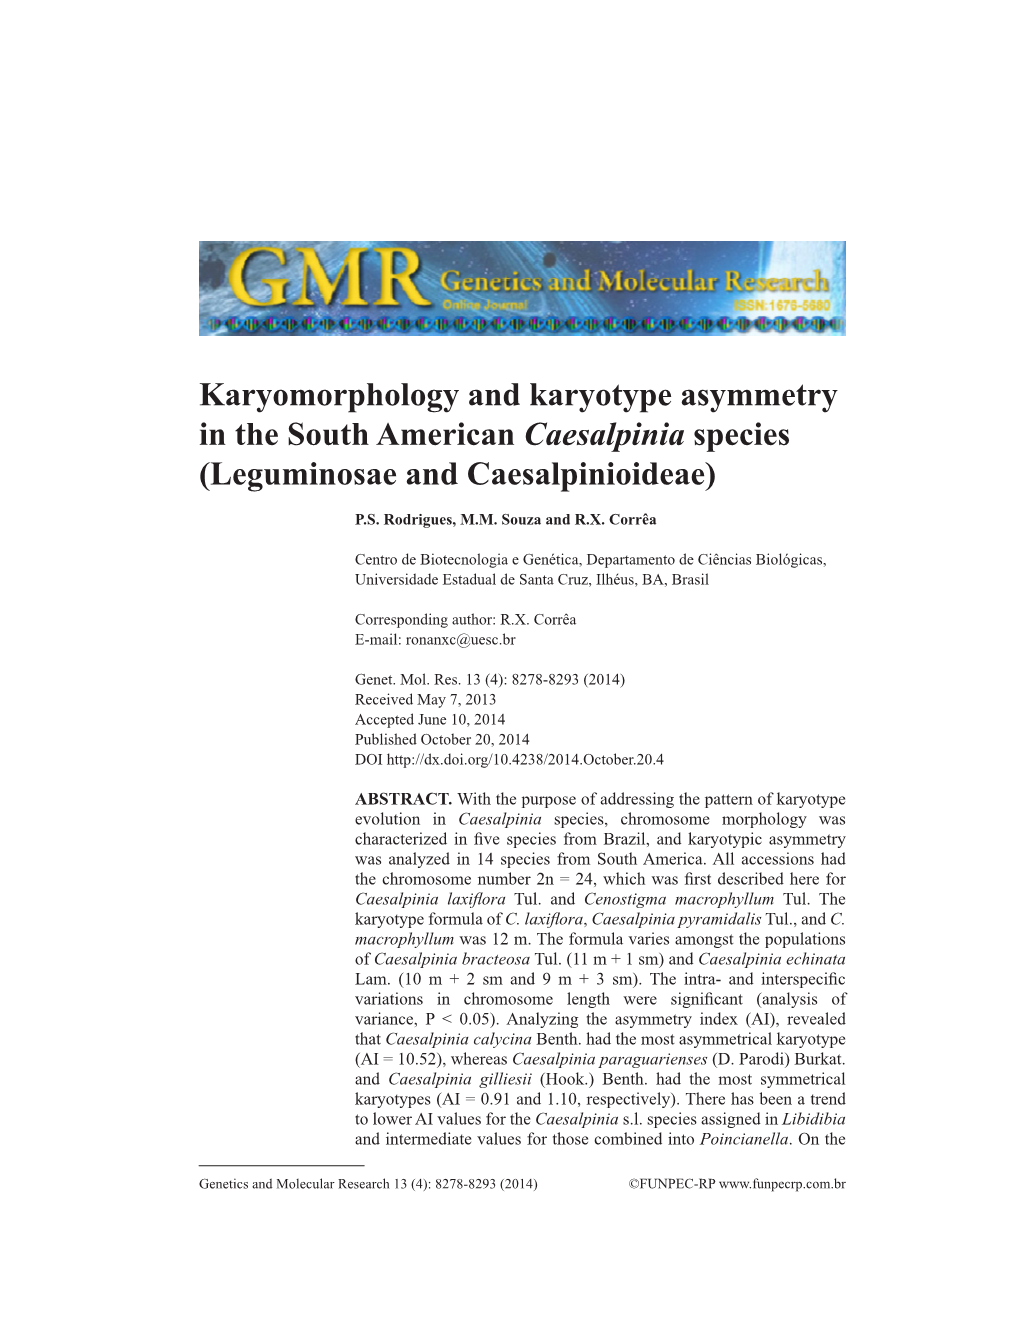 Karyomorphology and Karyotype Asymmetry in the South American Caesalpinia Species (Leguminosae and Caesalpinioideae)